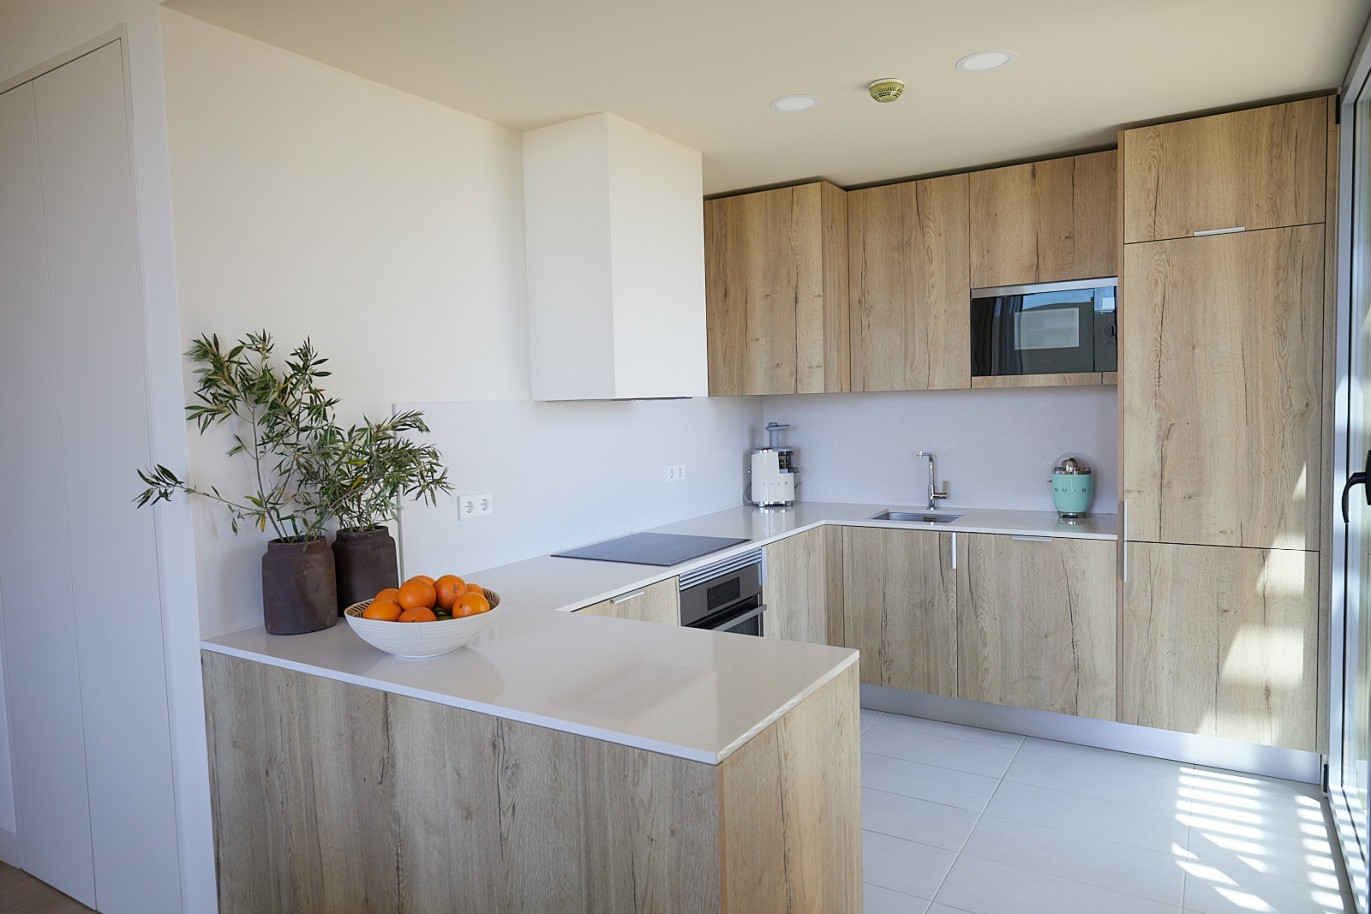 2 bedroom apartment in resort, for sale in Porches, Algarve_230650